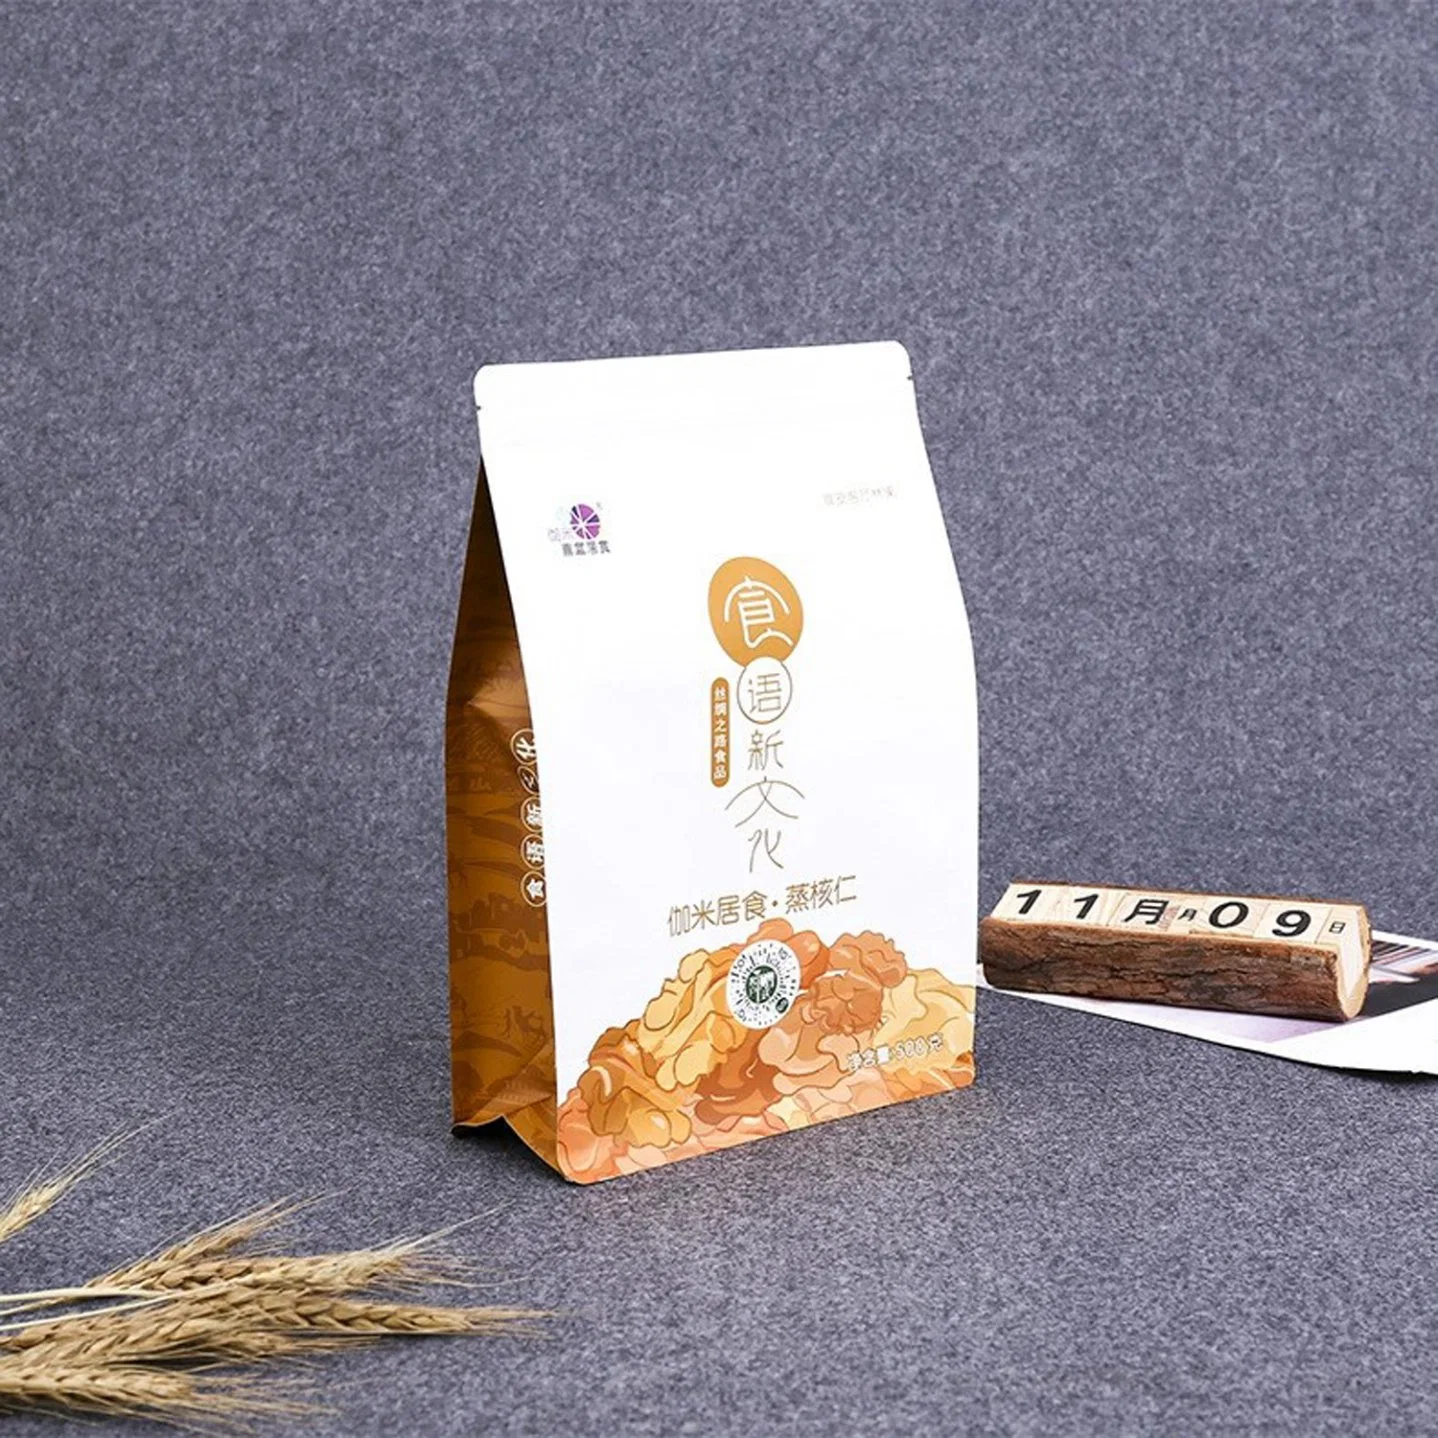 Chestnut Pumpkin Cake Crispy Chips Food Snacks Pastry Gift Package Plastic Bag